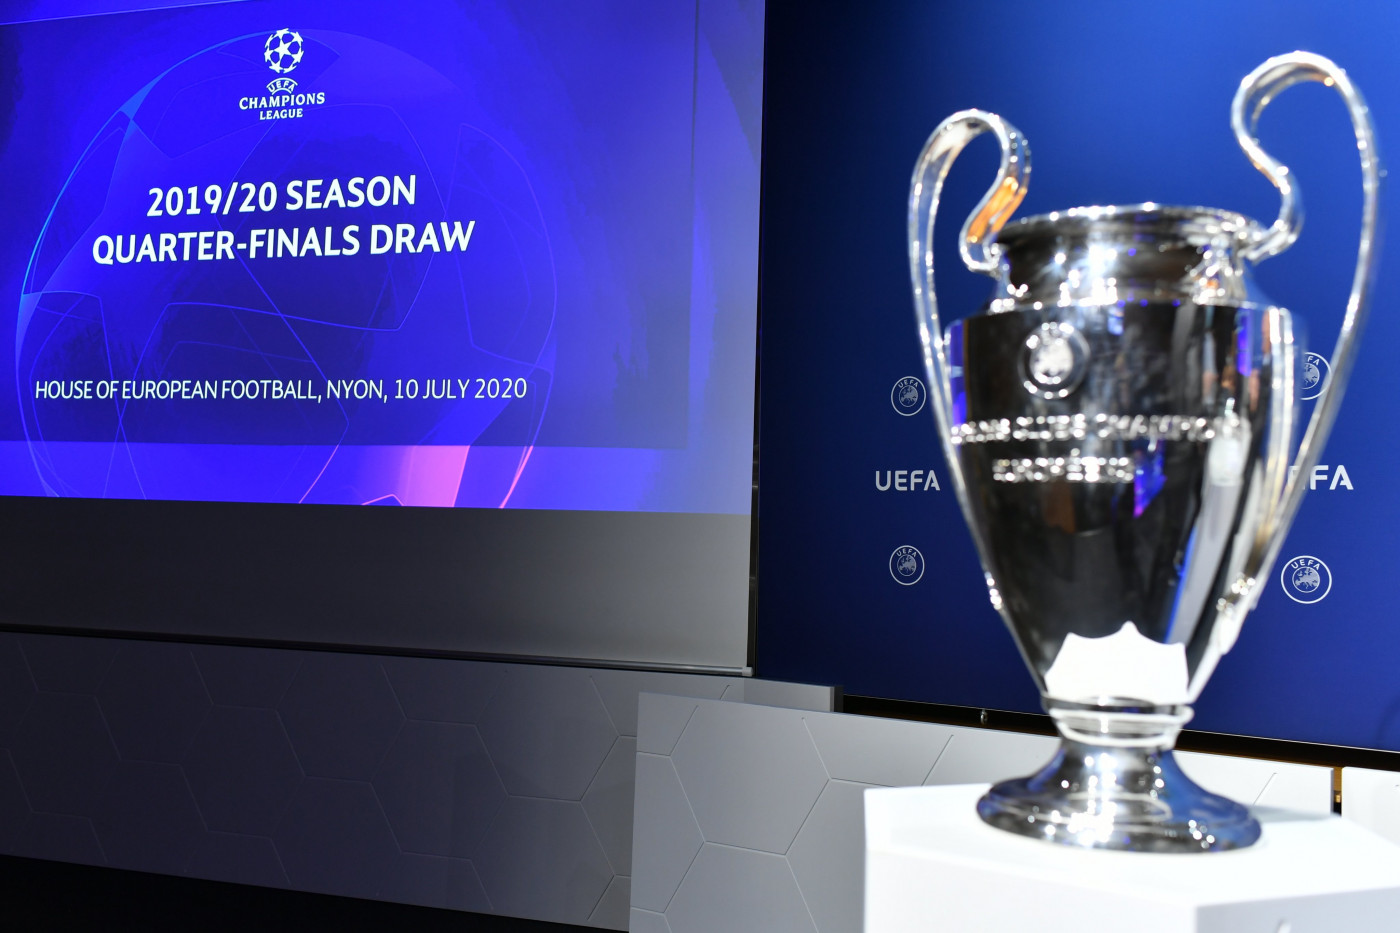 Confira os jogos de ida das oitavas de final da Champions League.